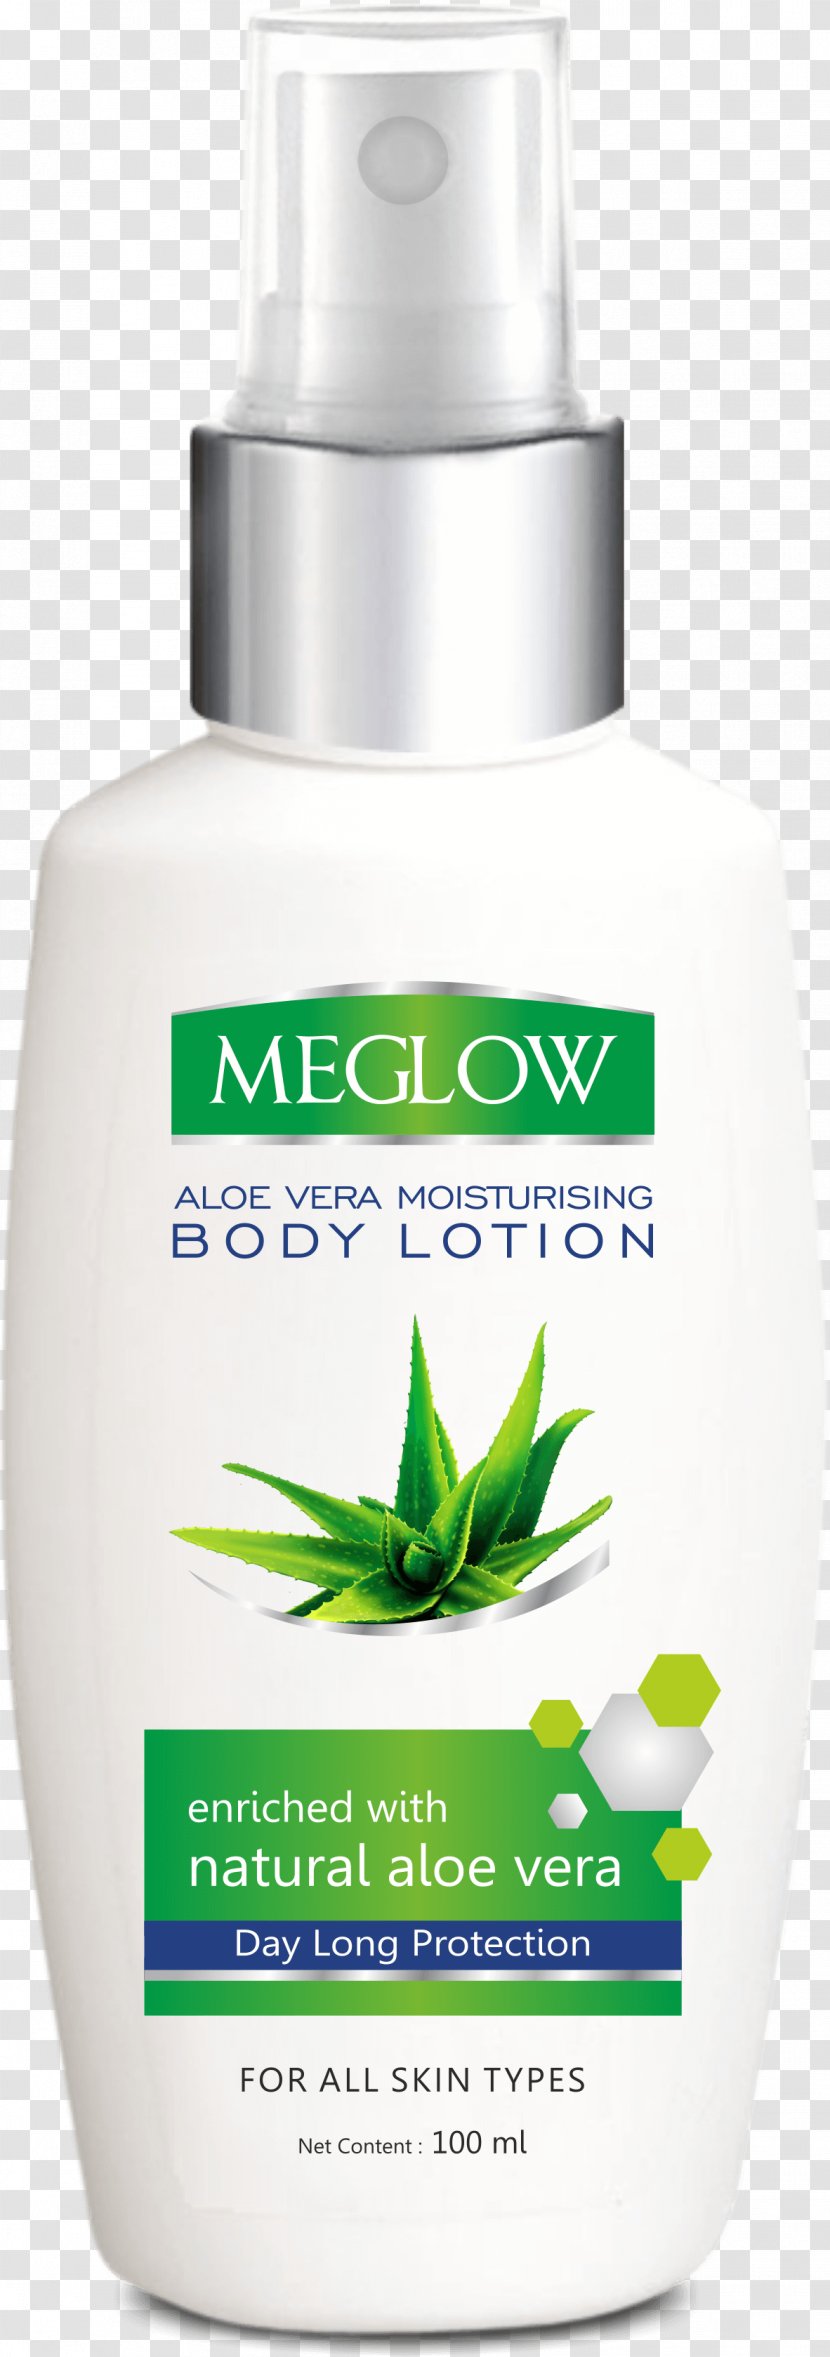 Lotion Sunscreen Moisturizer Aloe Vera Cream - Whole Health Transparent PNG